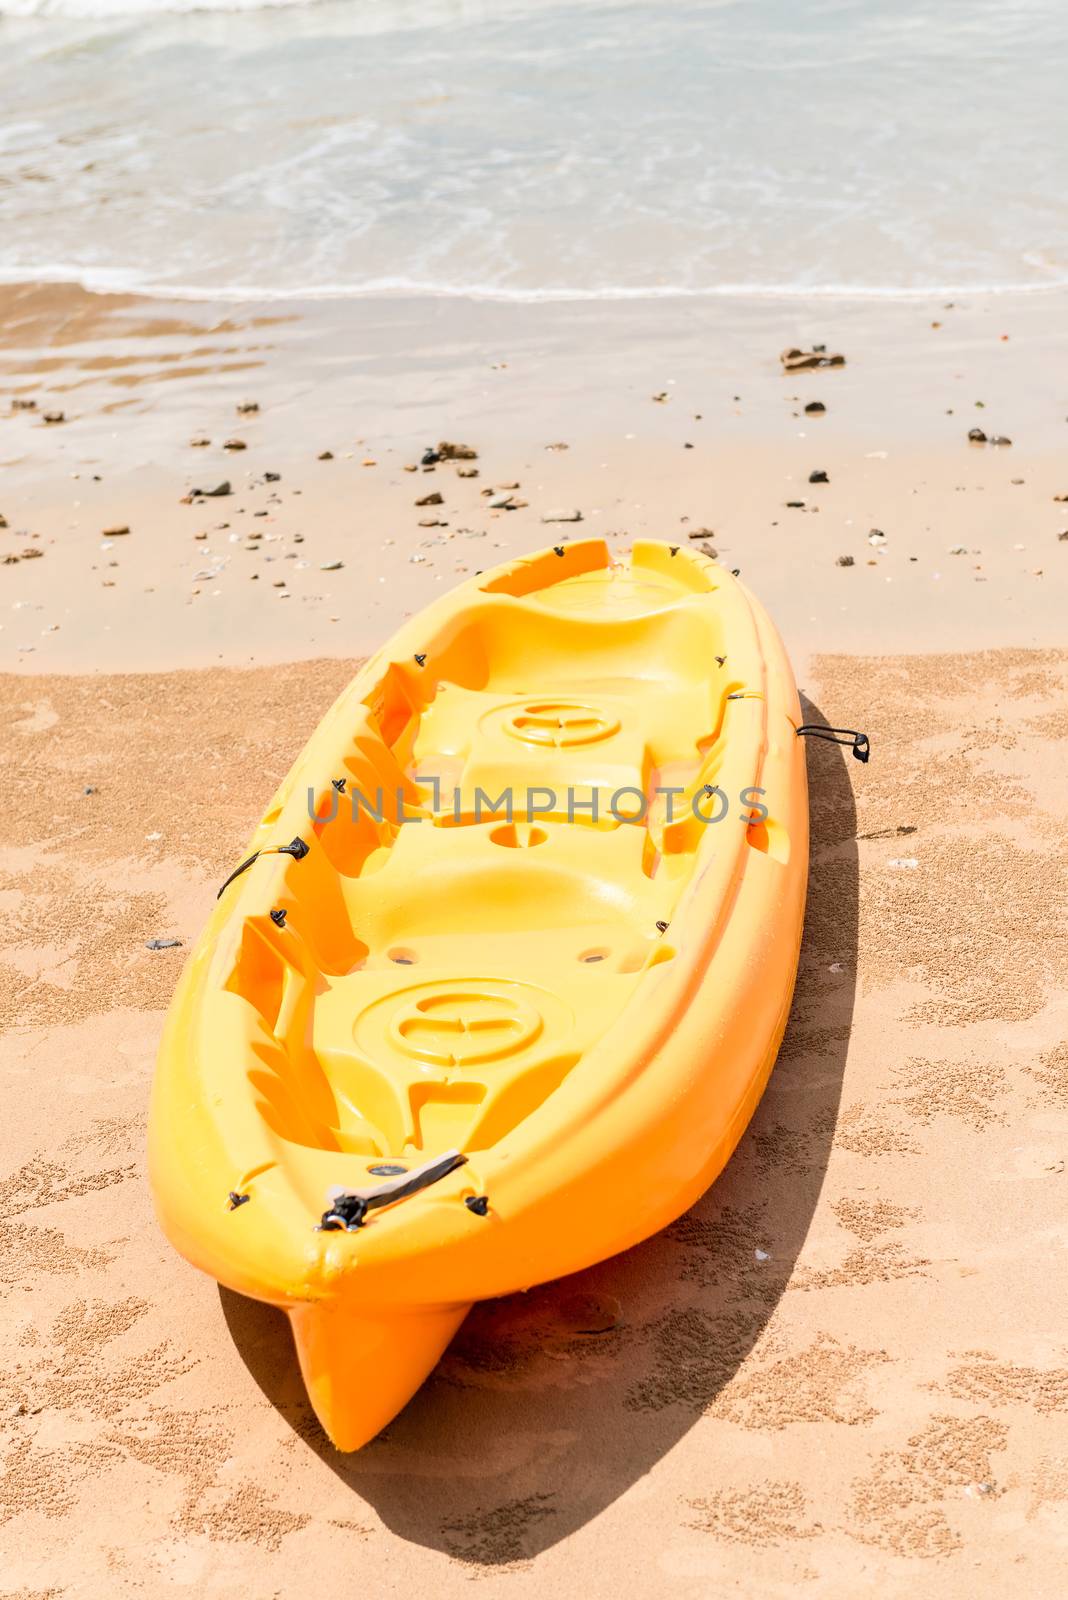 yellow plastic kayak lies on a sandy beach near the sea by kosmsos111